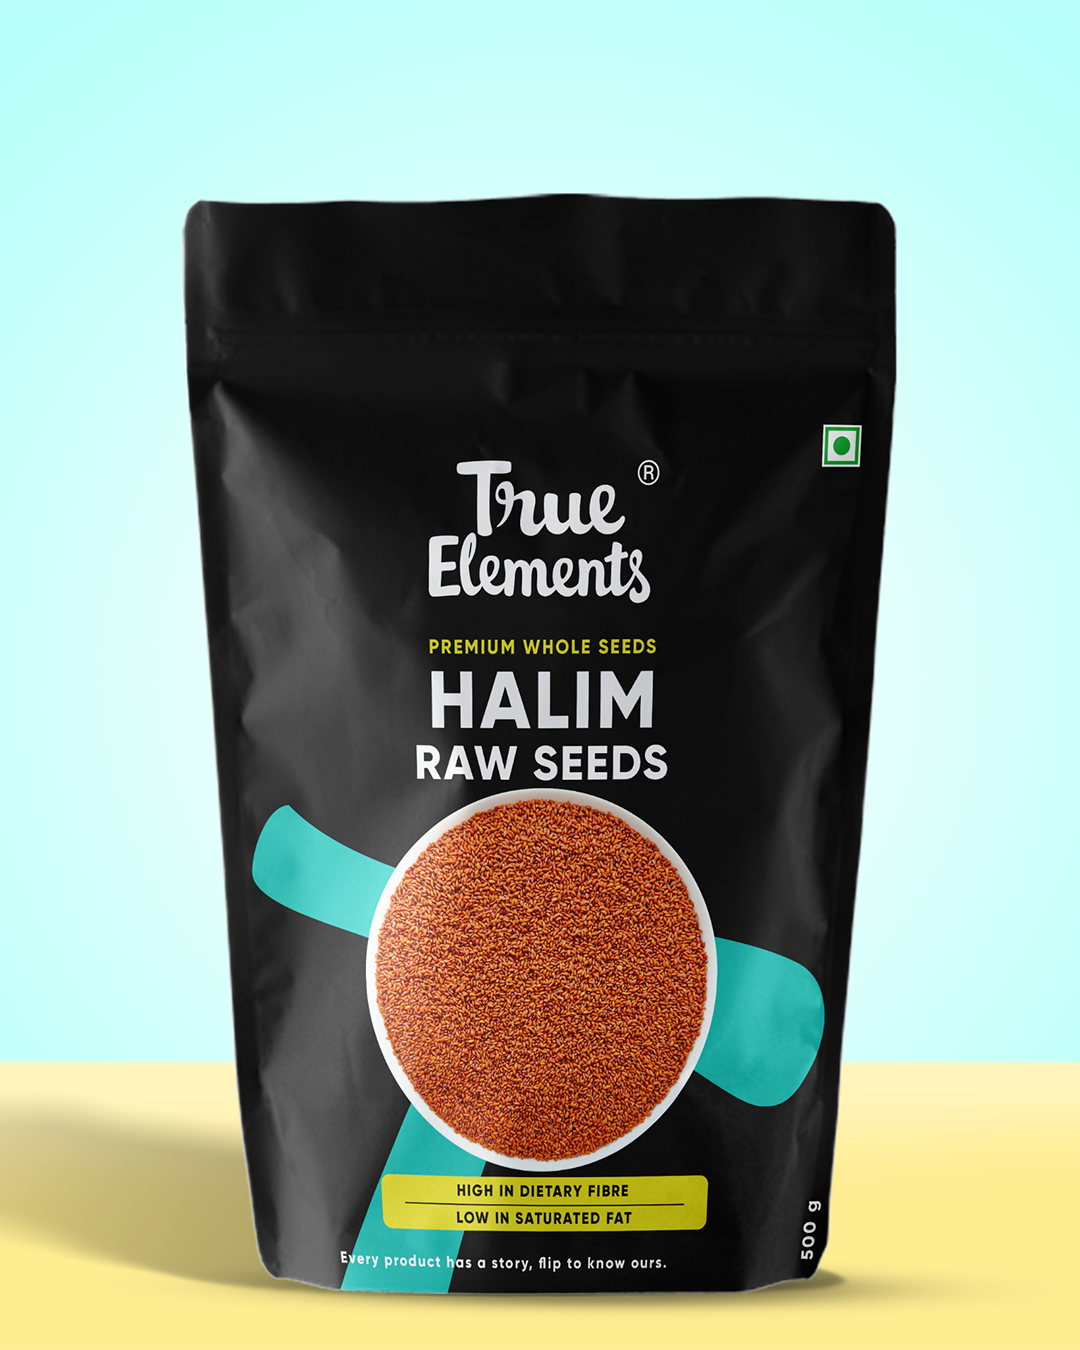 True elements raw halim seeds 500g Pouch (Premium Whole Seeds)